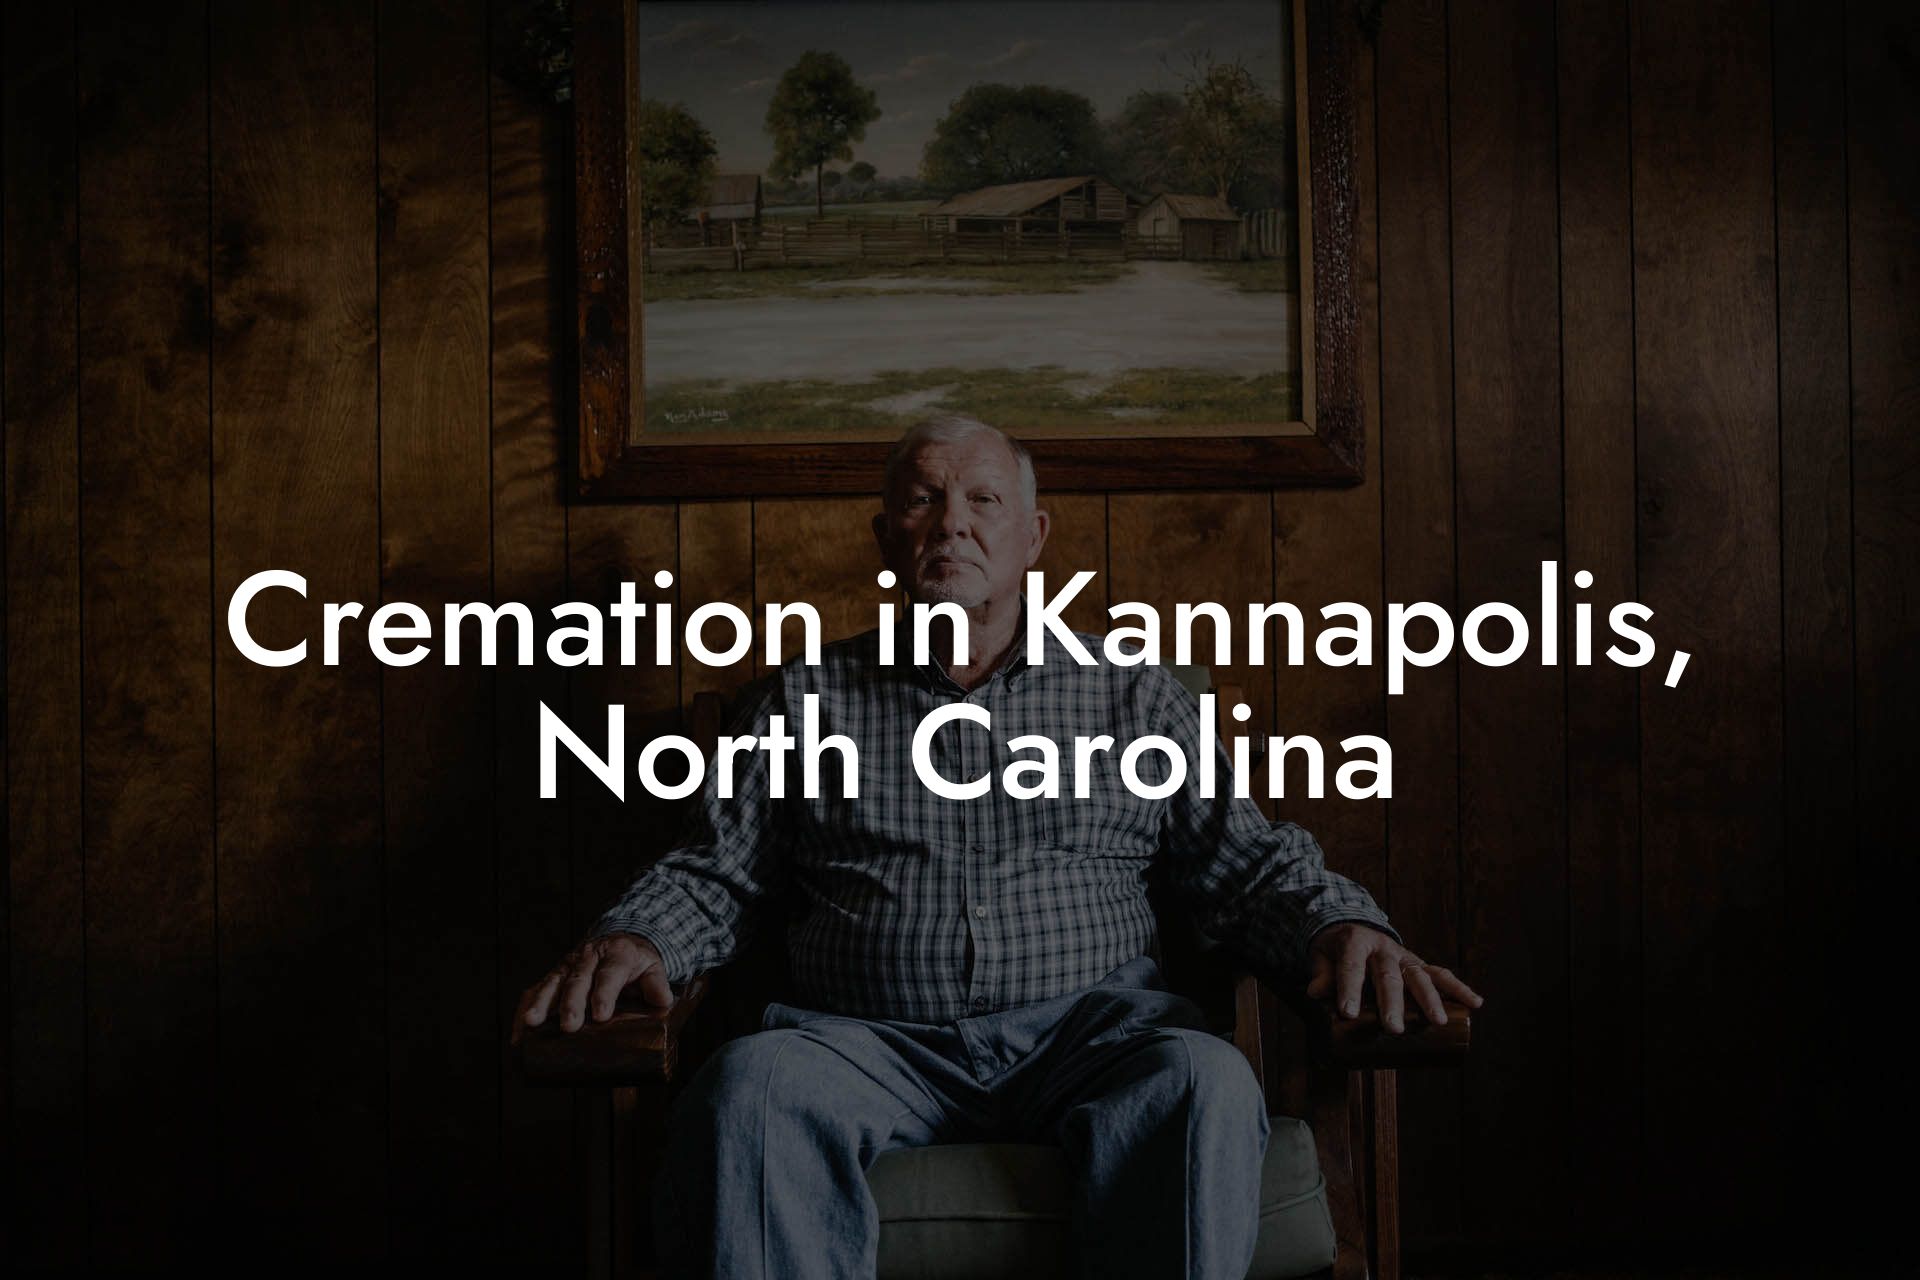 Cremation in Kannapolis, North Carolina